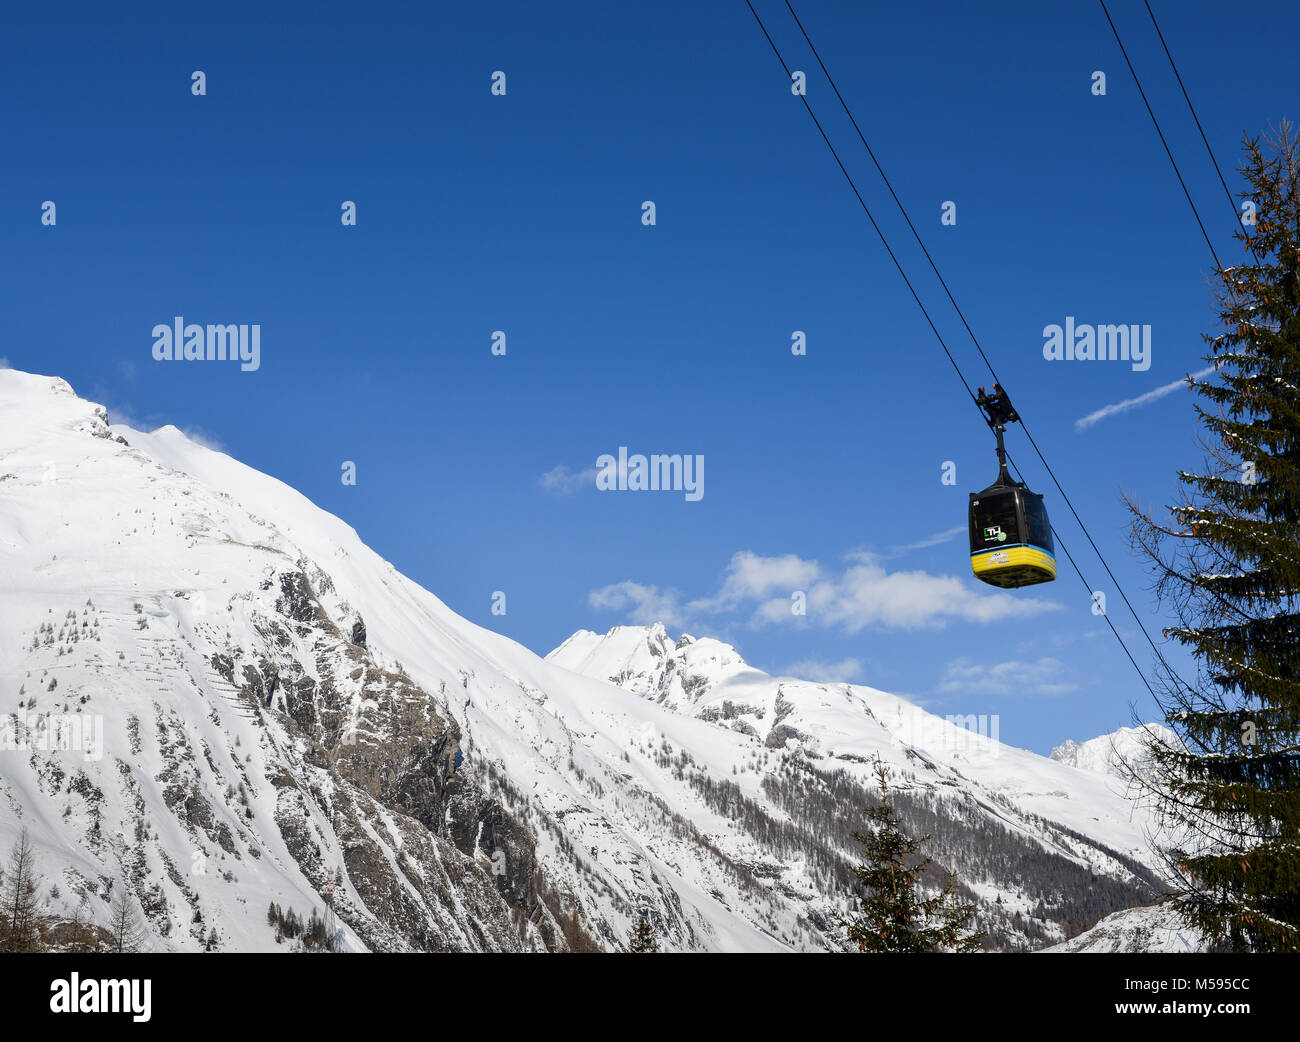 La Thuile, Italy - Feb 18, 2018: Gondola lift at ski resort in winter ...